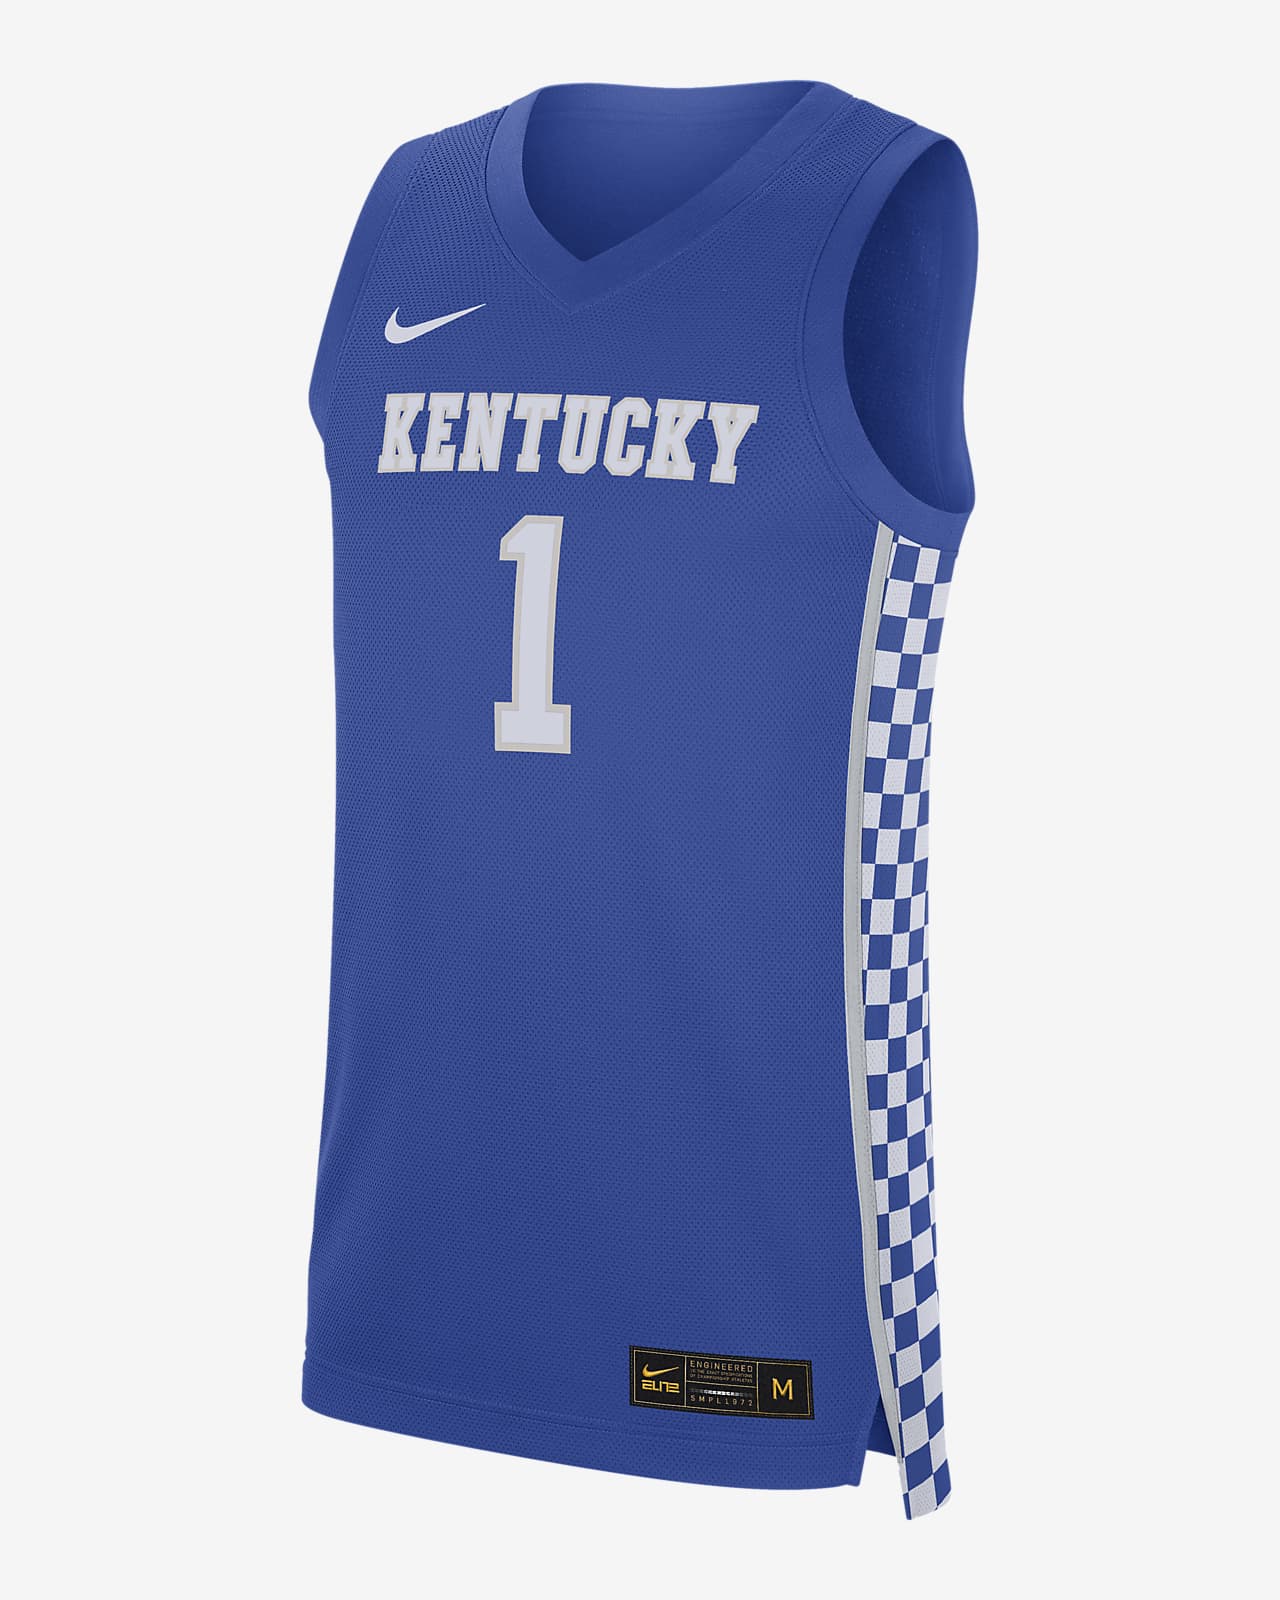 Nike College Replica (Kentucky) Men's Basketball Jersey